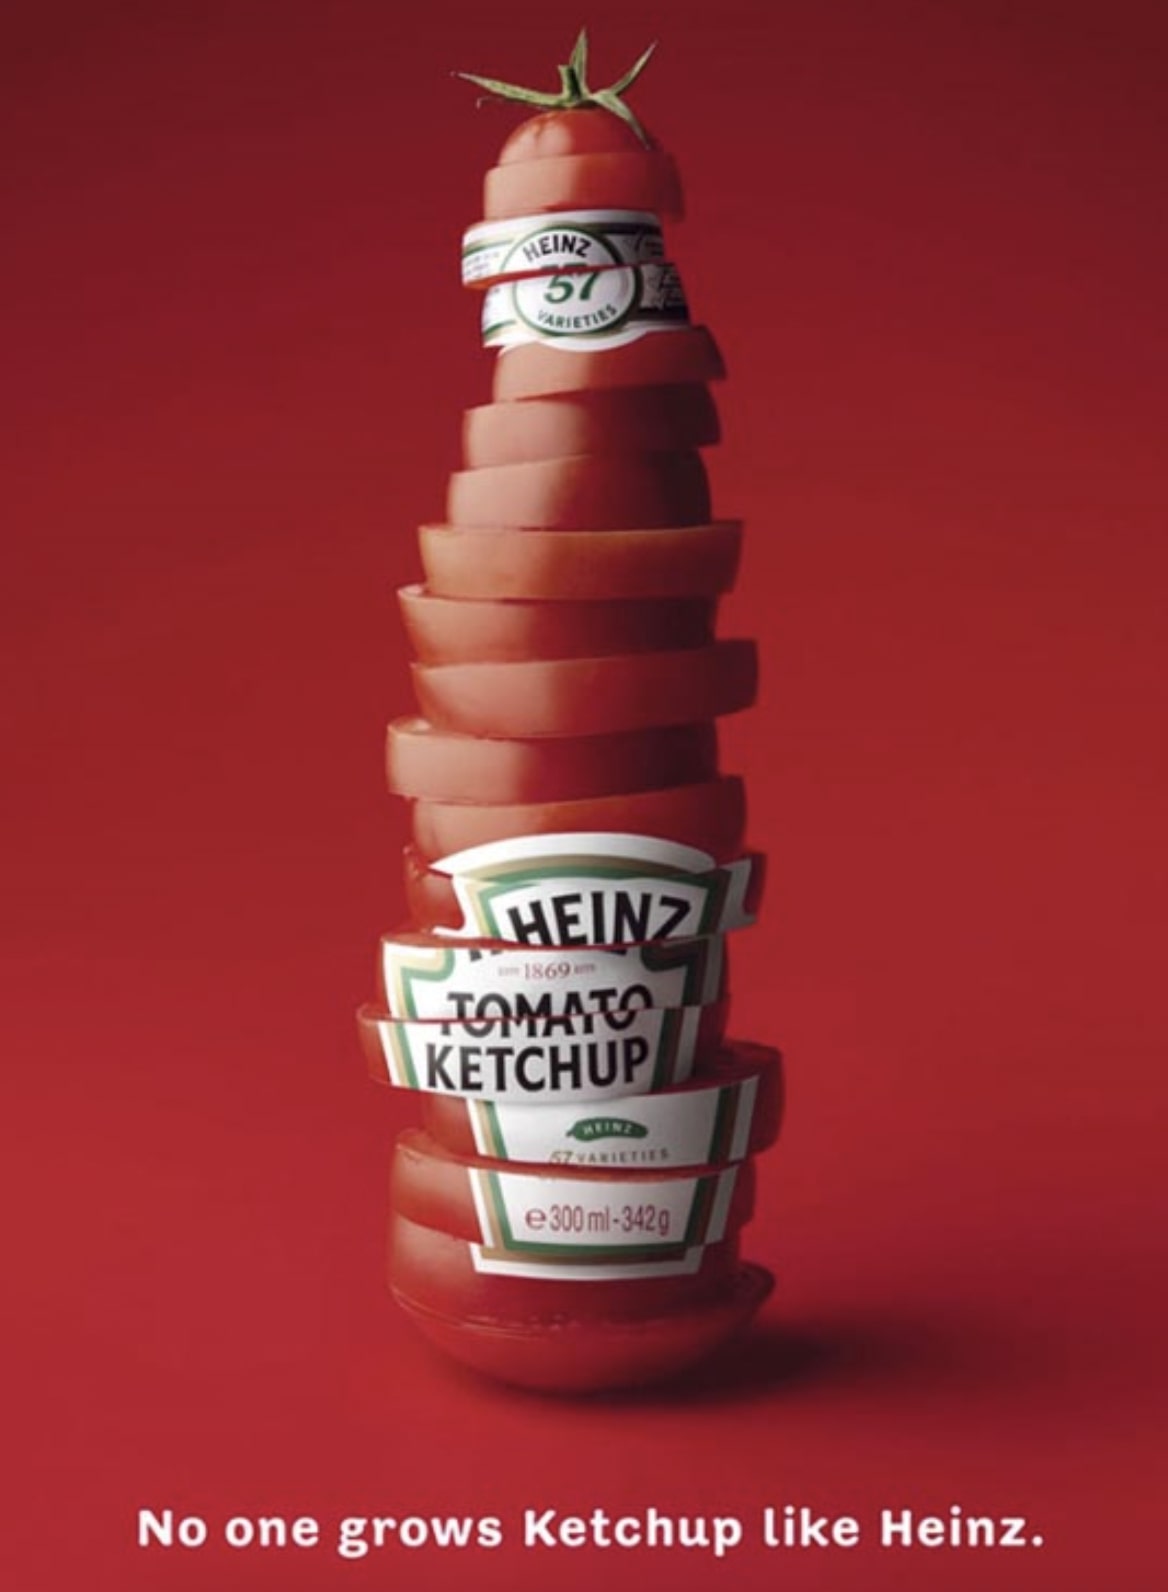 Heinz's ketchup print ad